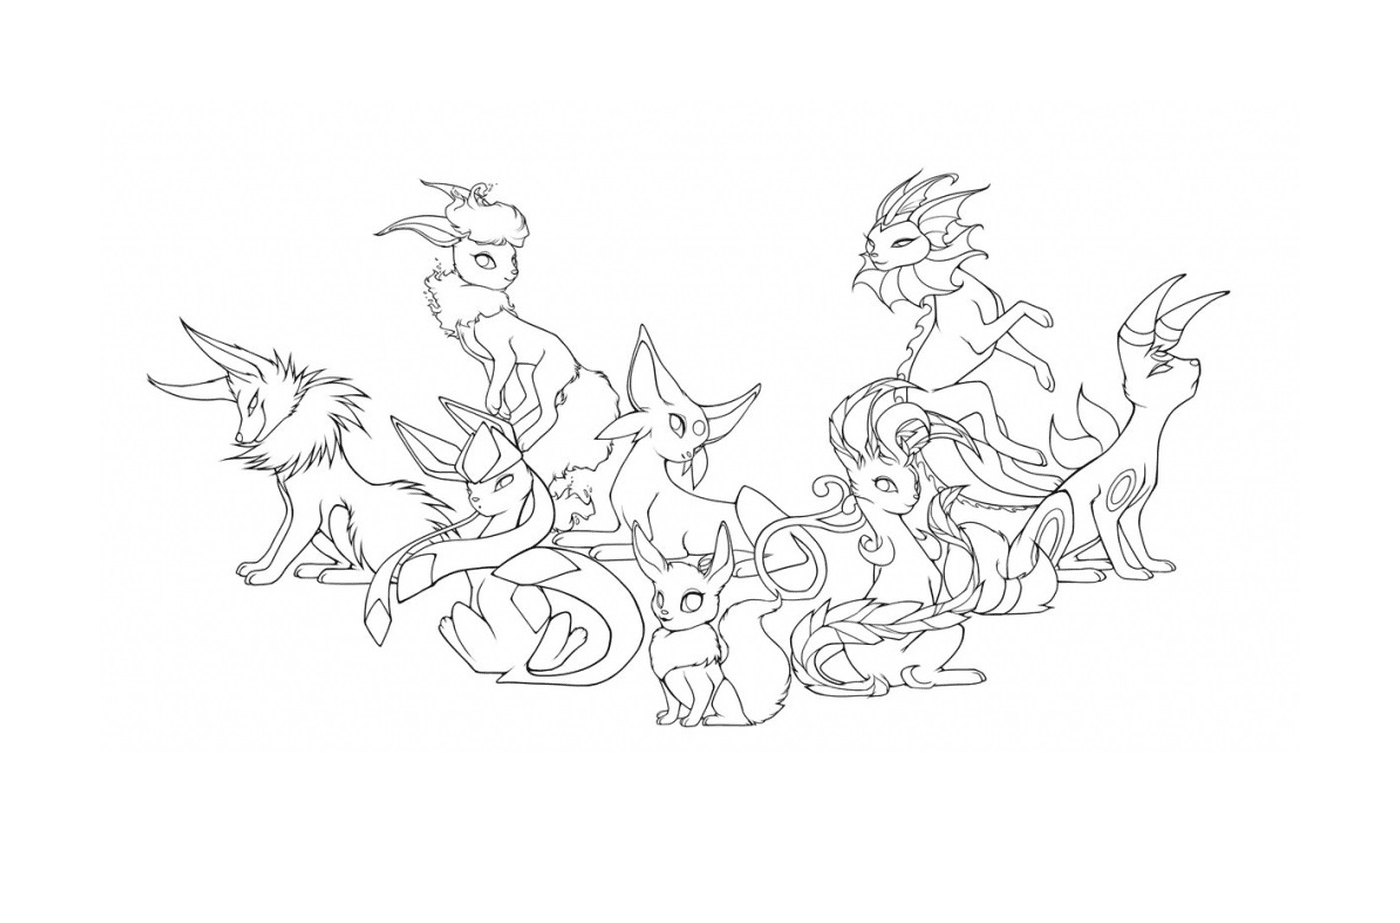  Pokémon Évoli Méga-Evoluzioni, diversità animale in gruppo 